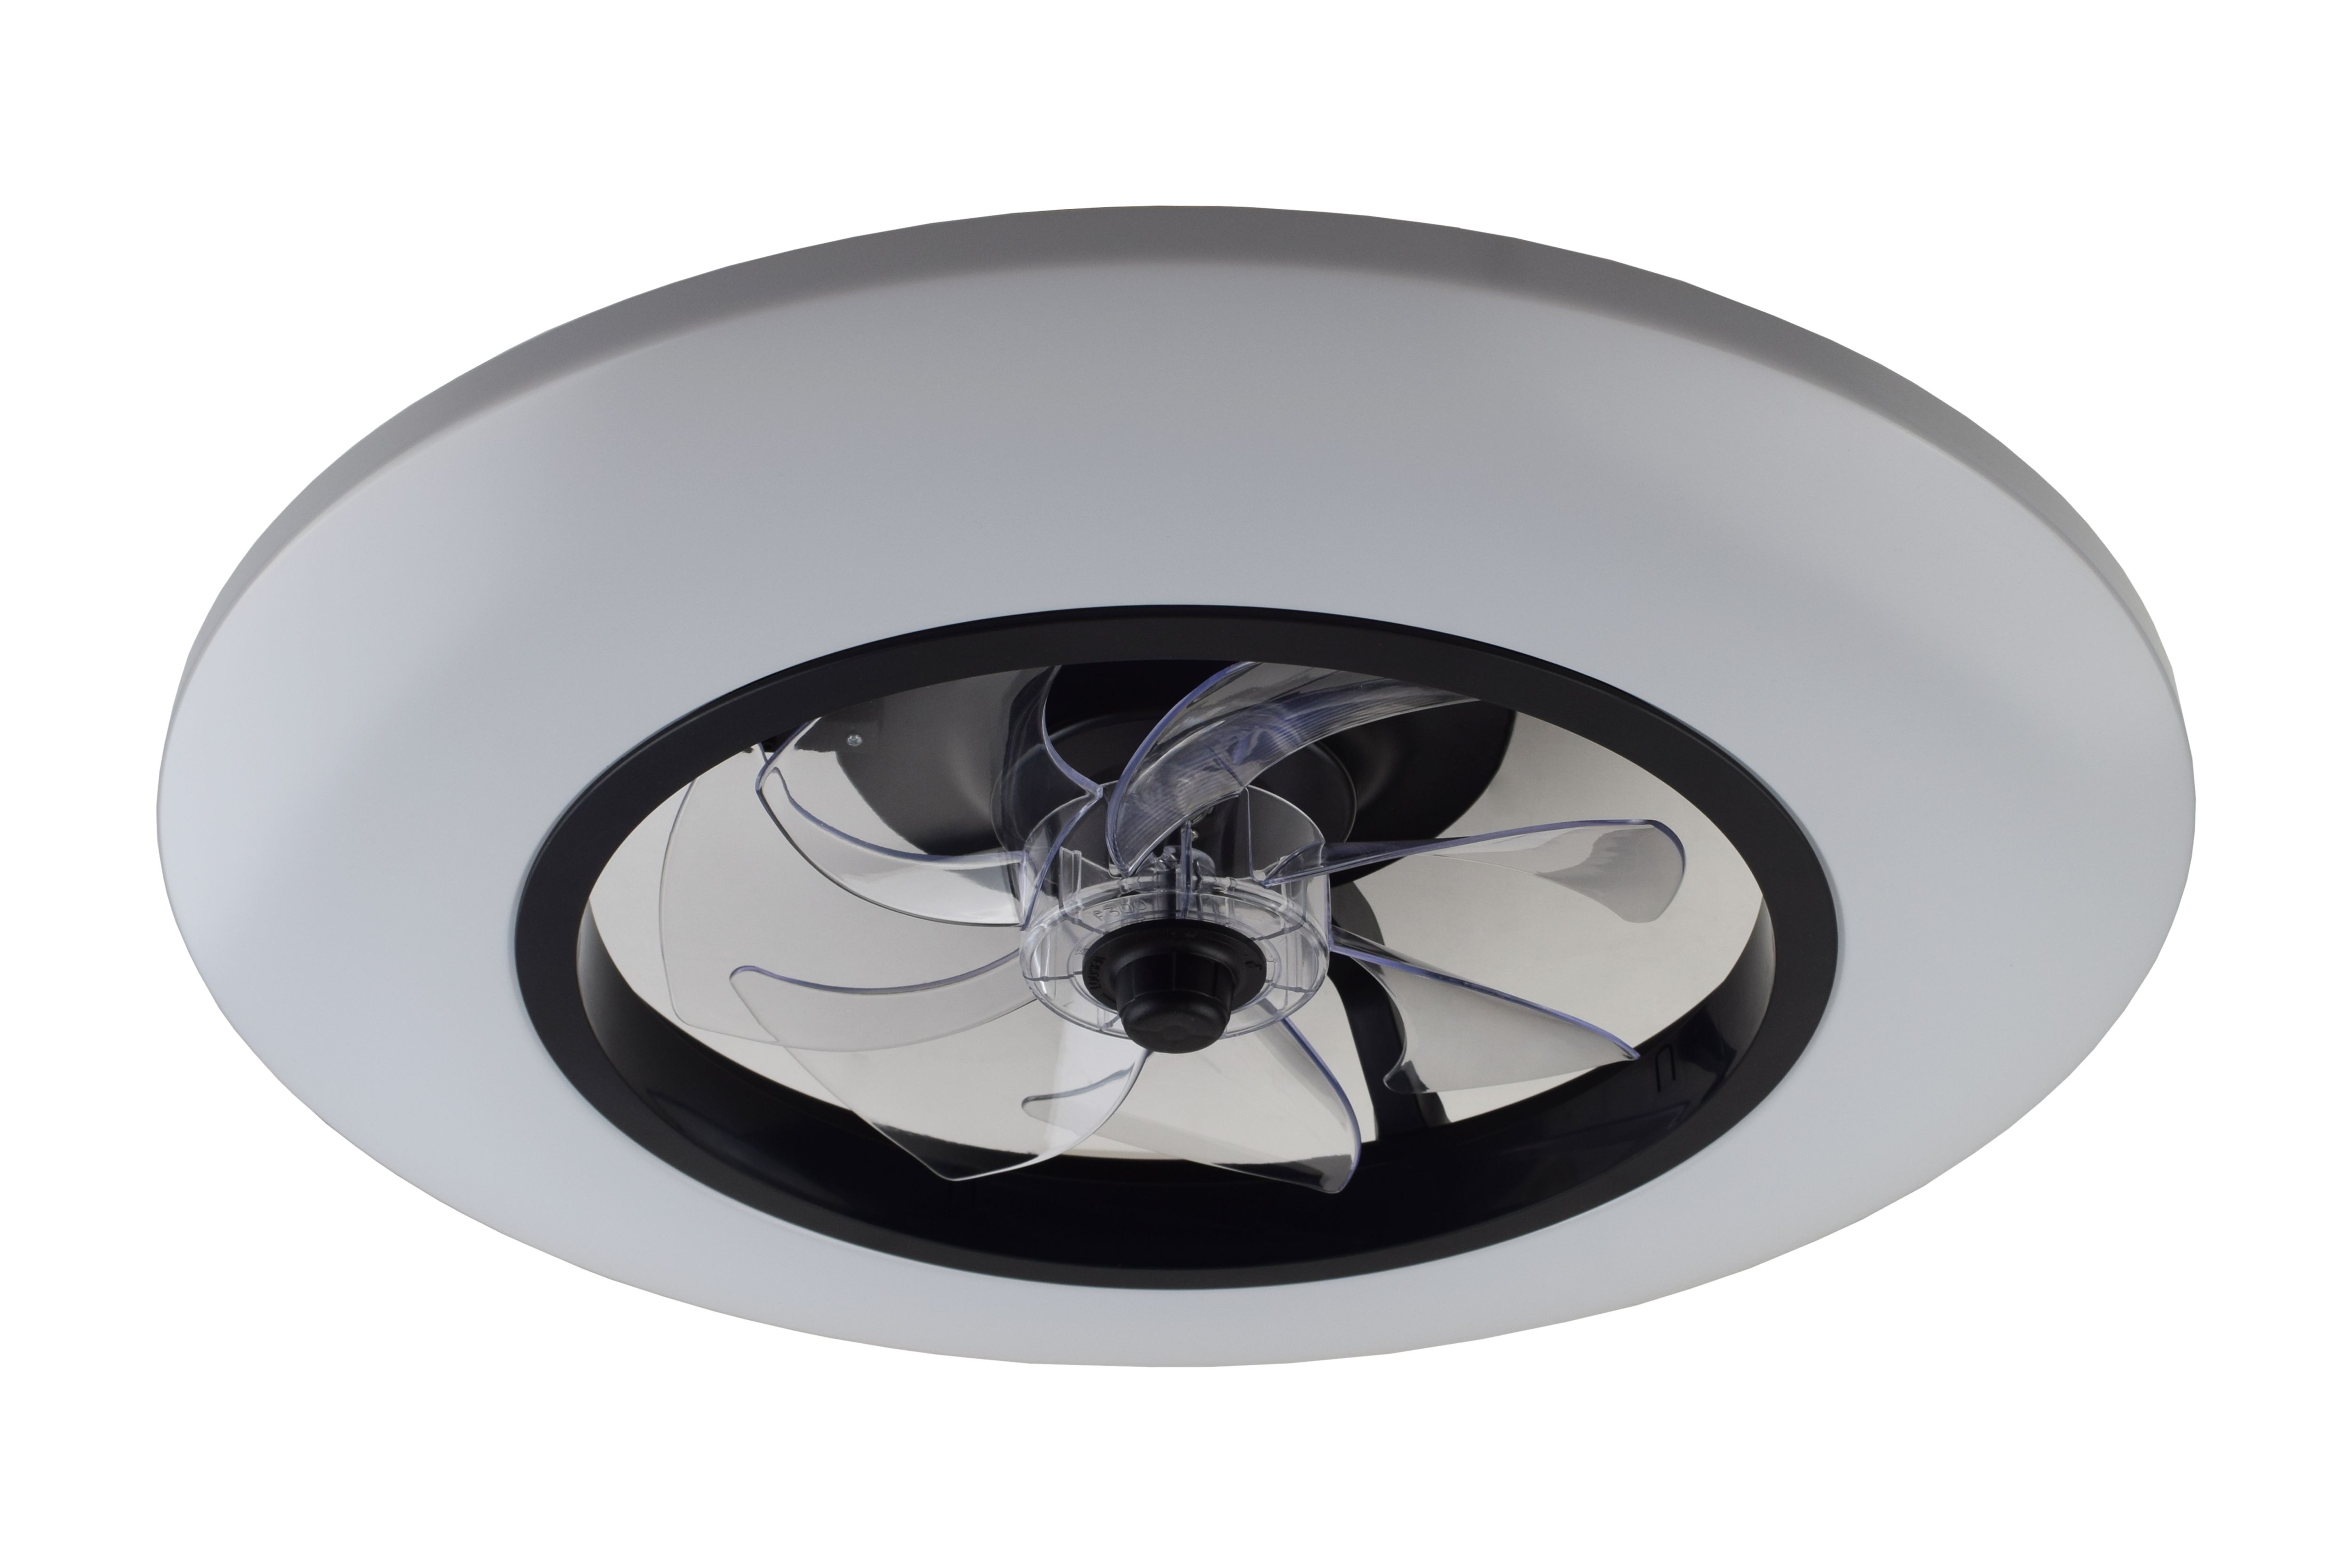 GoodHome Hewish Modern Black & white LED Ceiling fan light